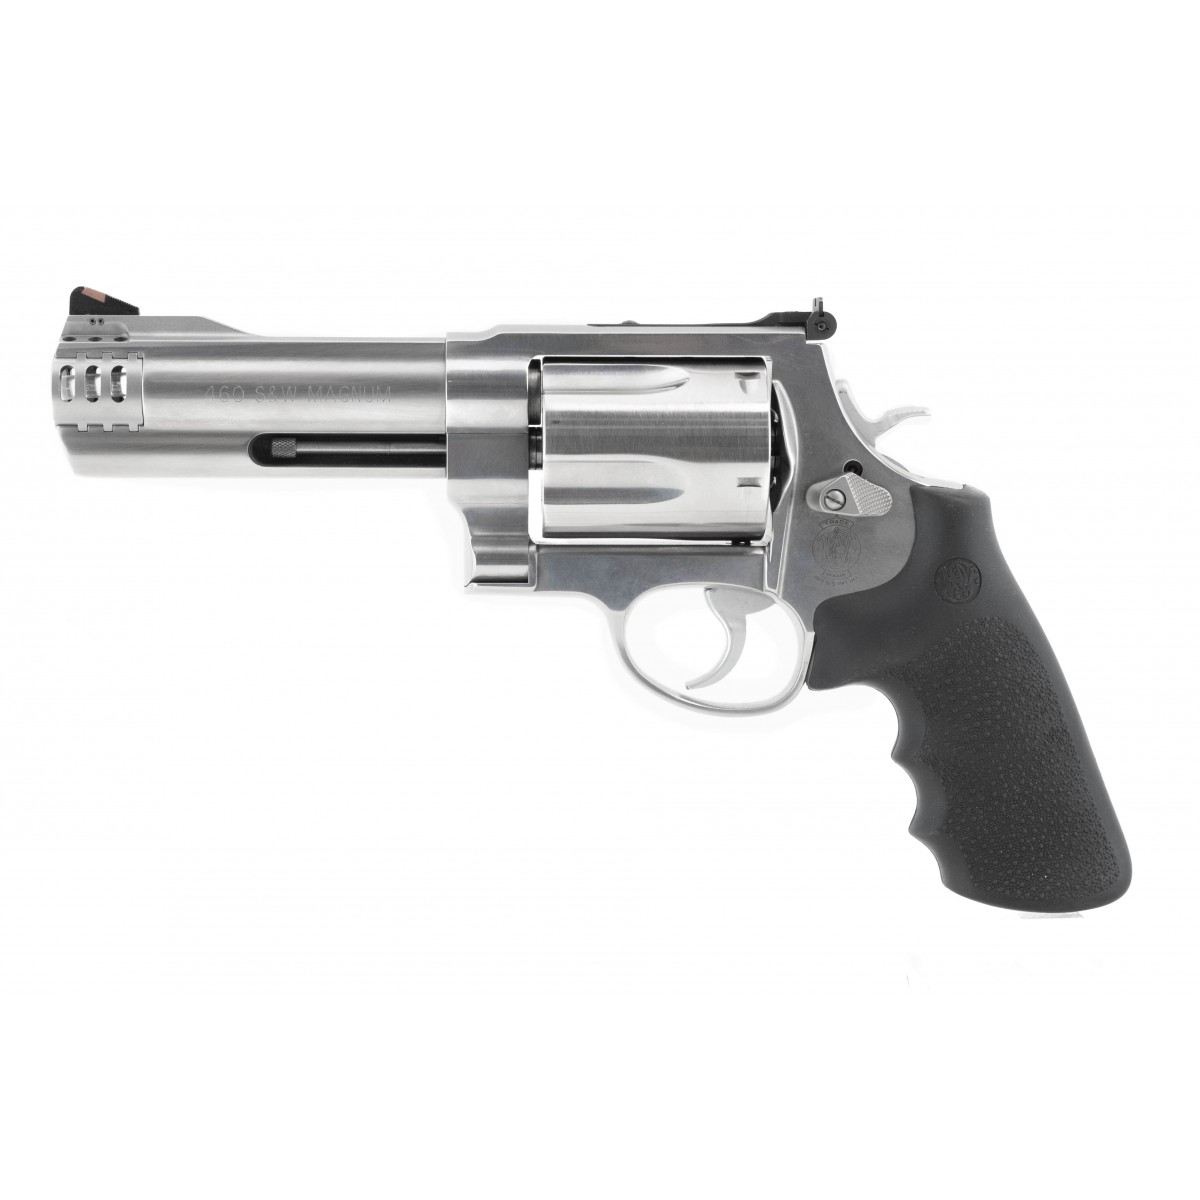 Smith & Wesson 460 XVR .460 Magnum caliber revolver for sale.